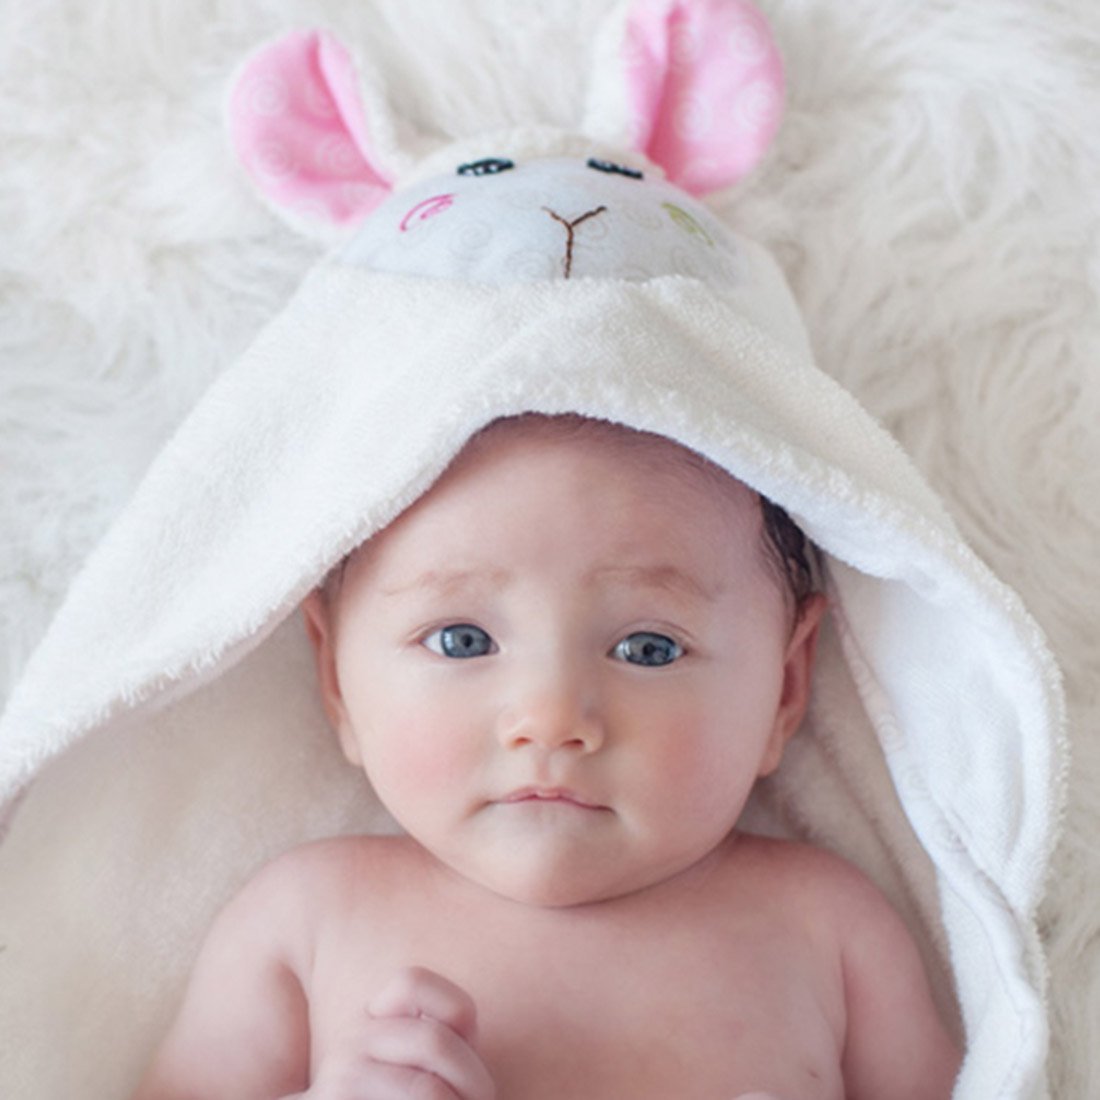 Zoocchini Baby Hooded Towel - Lola the Lamb